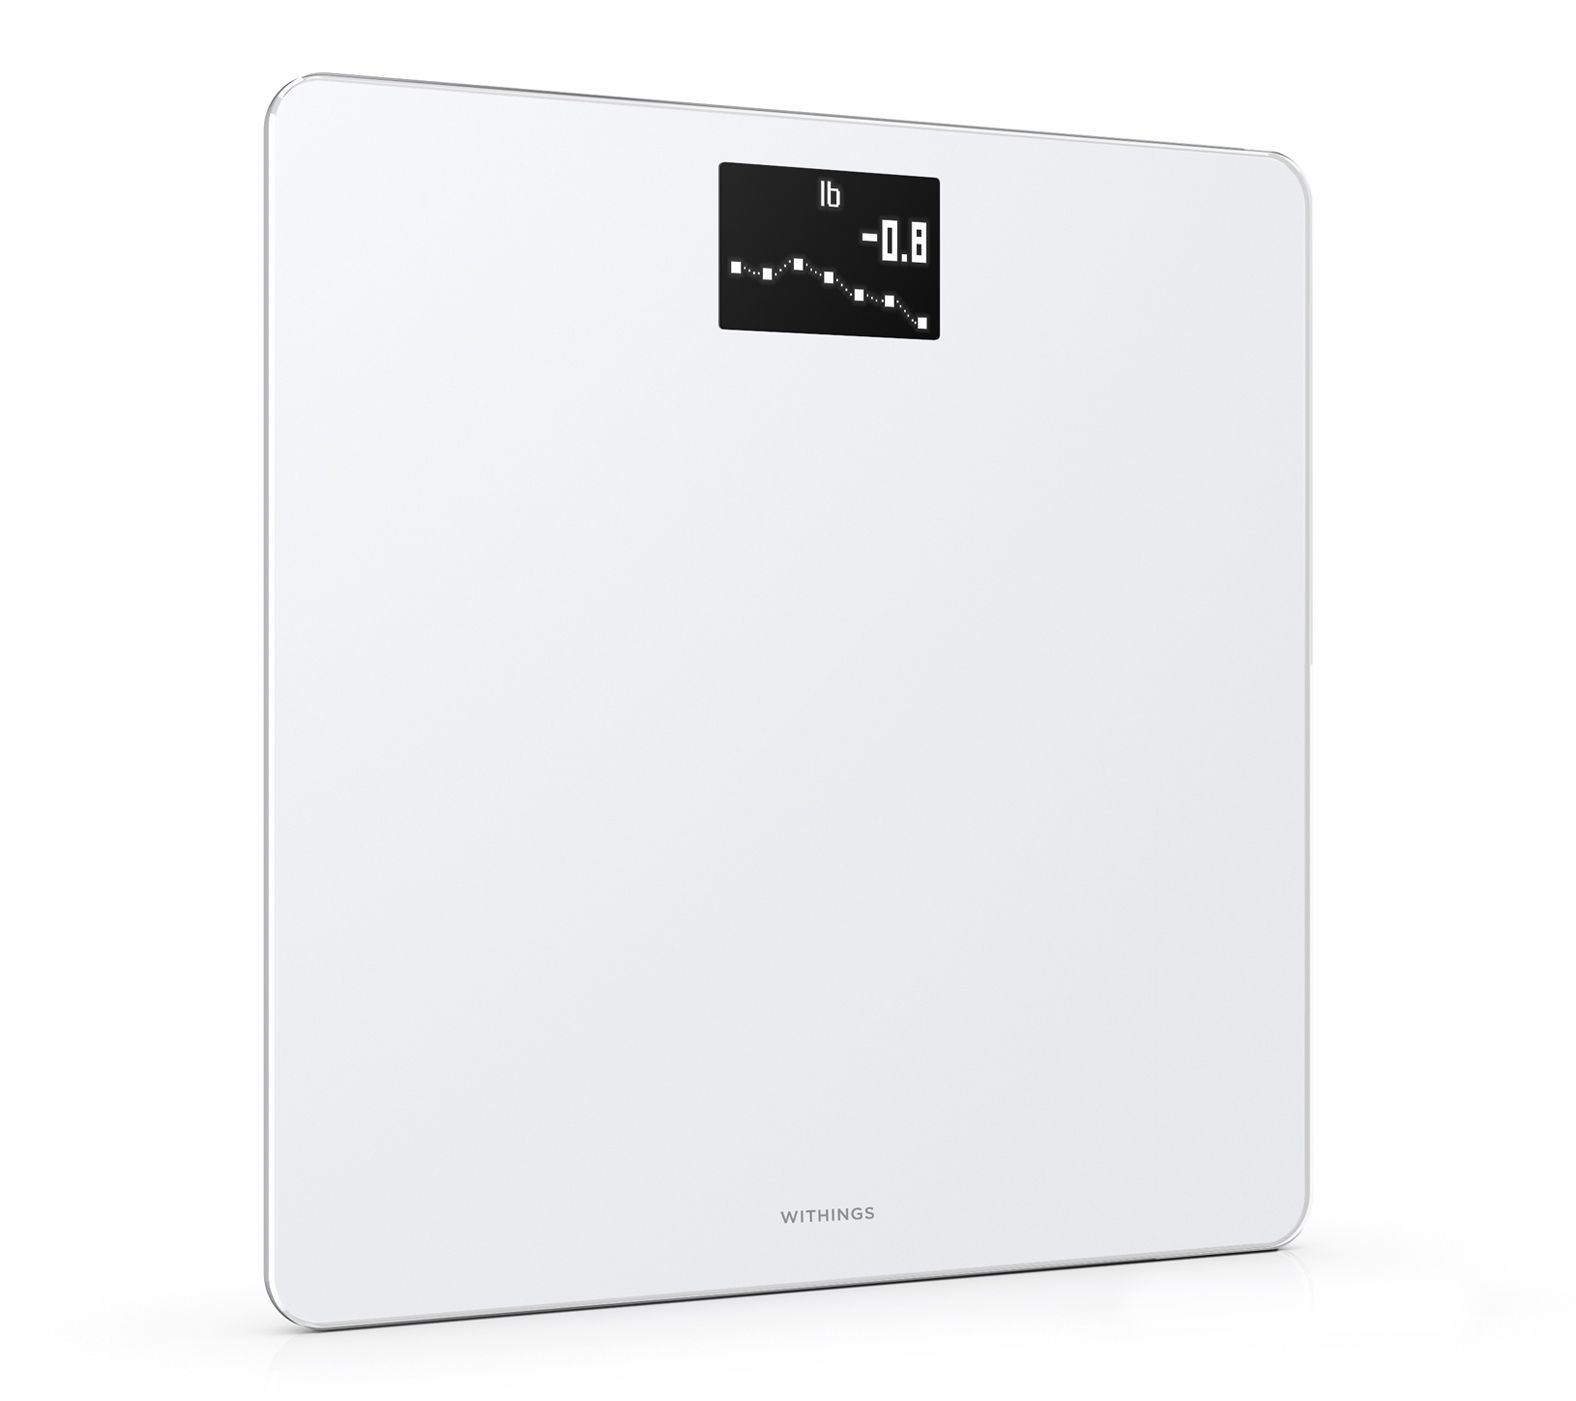 NOKIA Body WBS06 BMI Smart Scale - BMI Wi-Fi Scale, WHITE